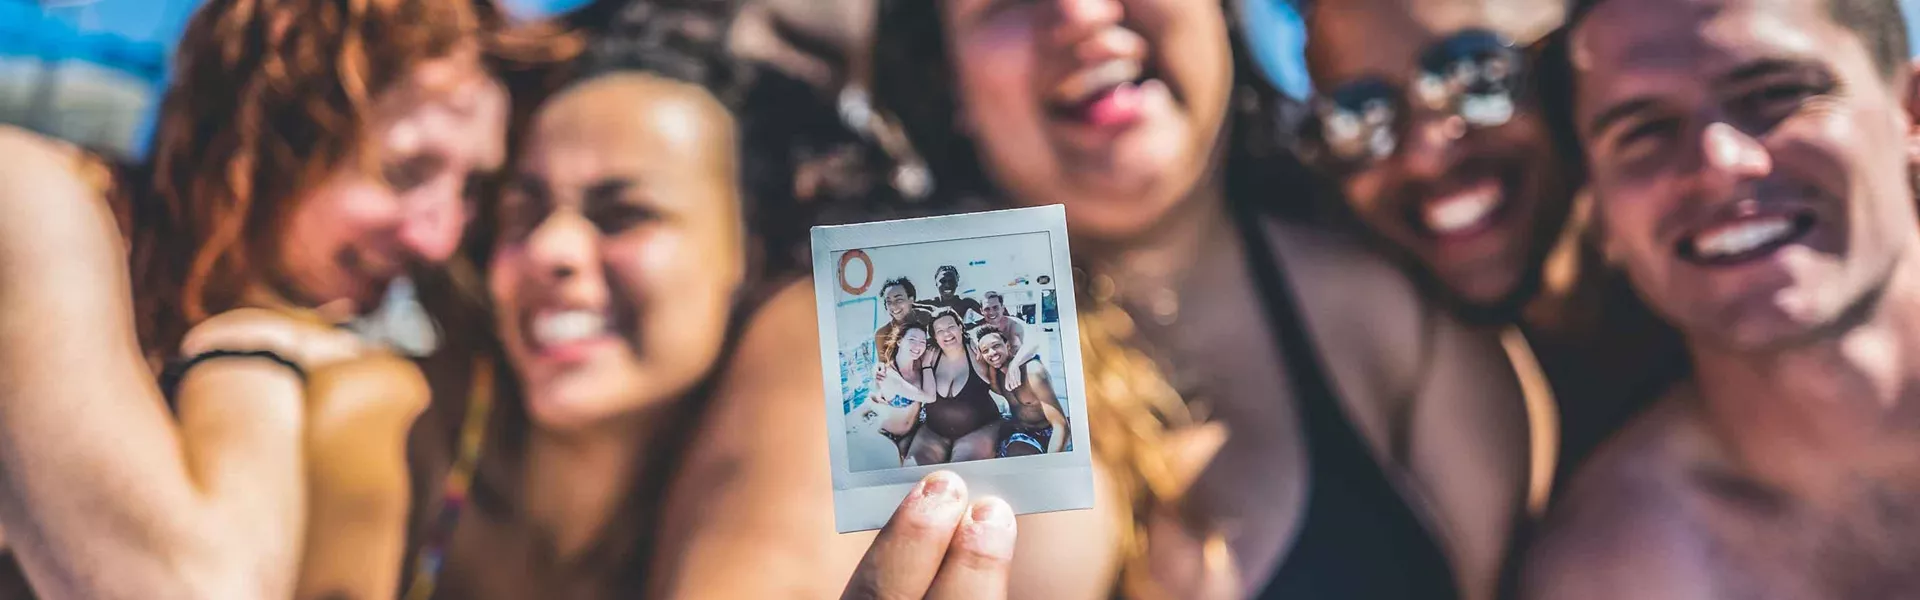 Group Holding Up Polaroid Photo On A Reunion Trip